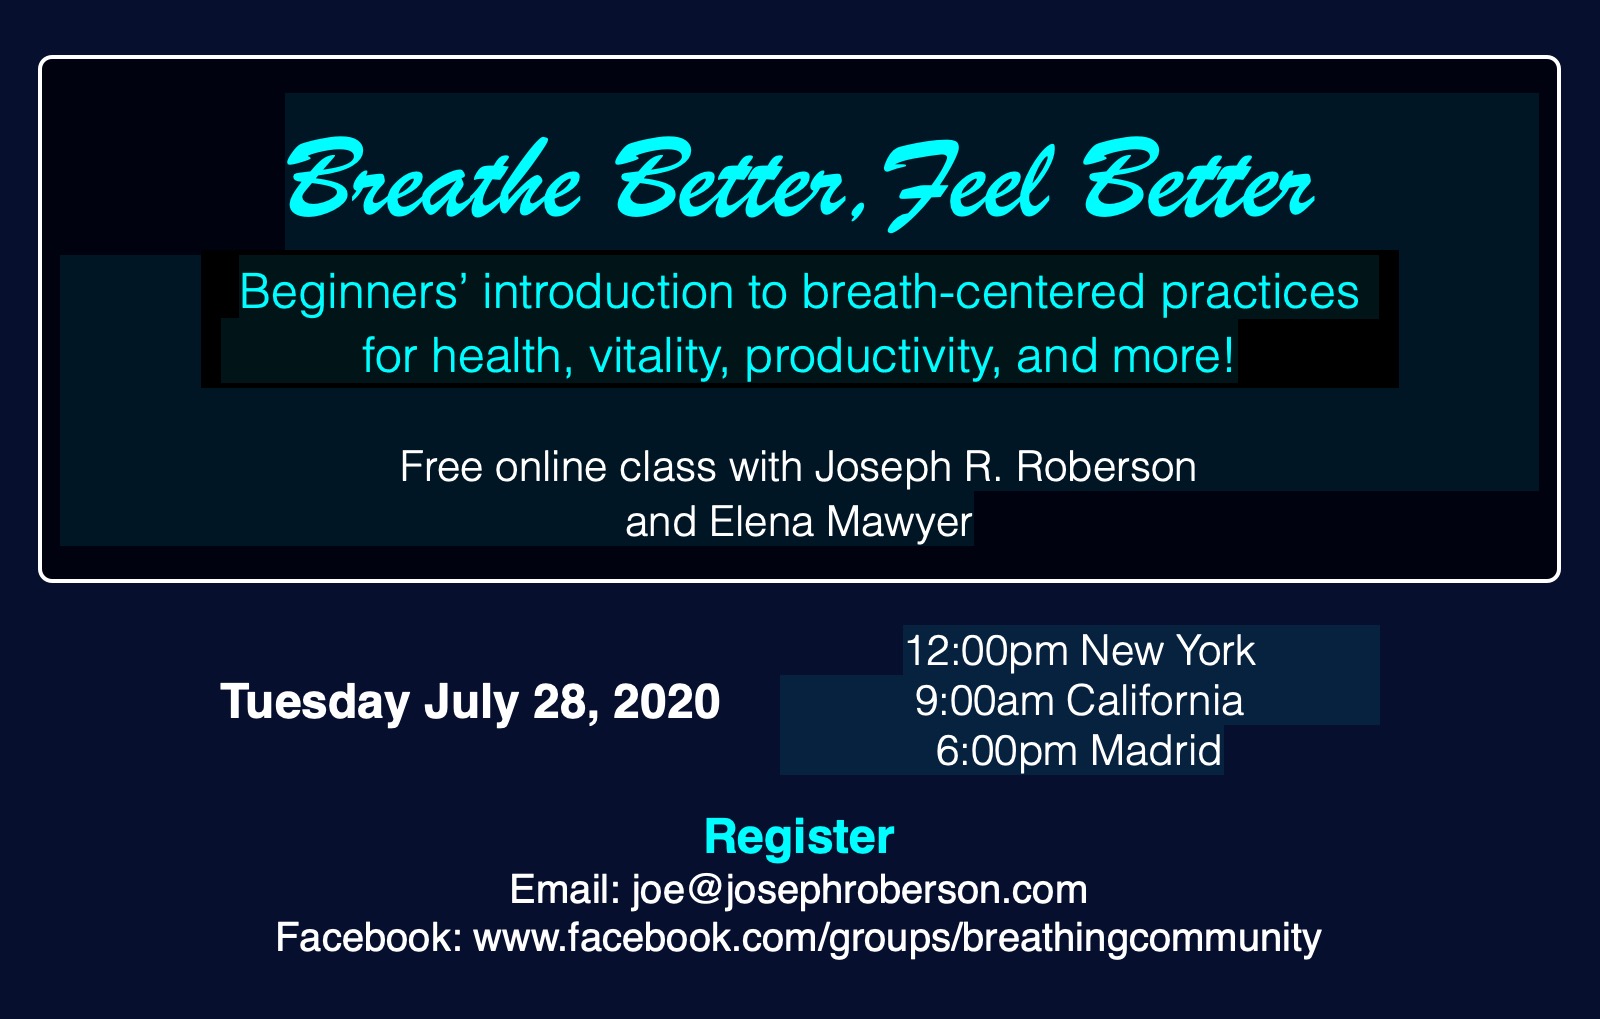 Breath Better, Feel Better! FREE CLASS